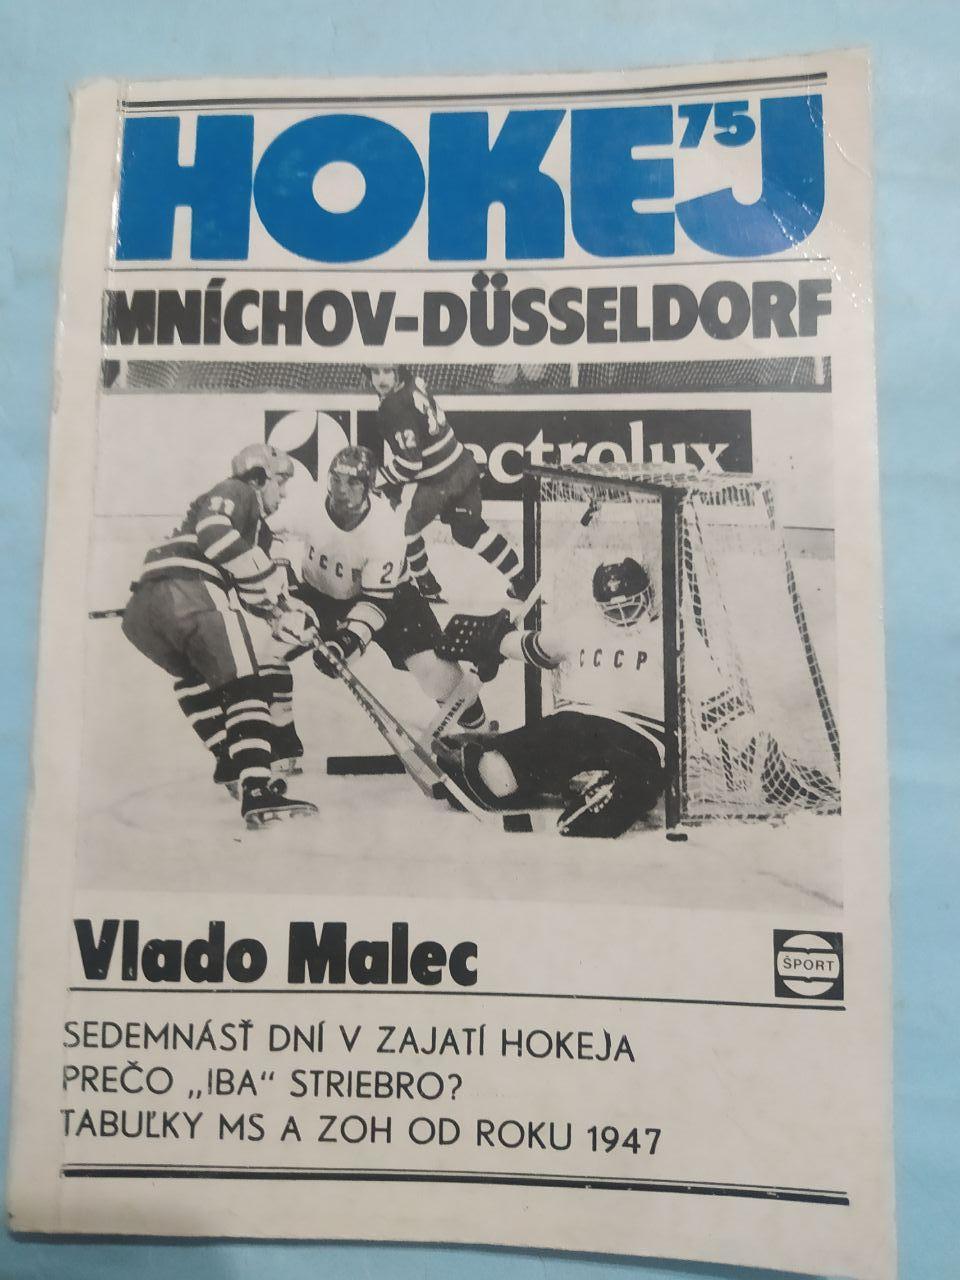 Vlado Malec HOKEJ MNICHOV - DUSSELDORF 1975 Хоккей ФРГ Мюнхен Дюссельдорф 1975